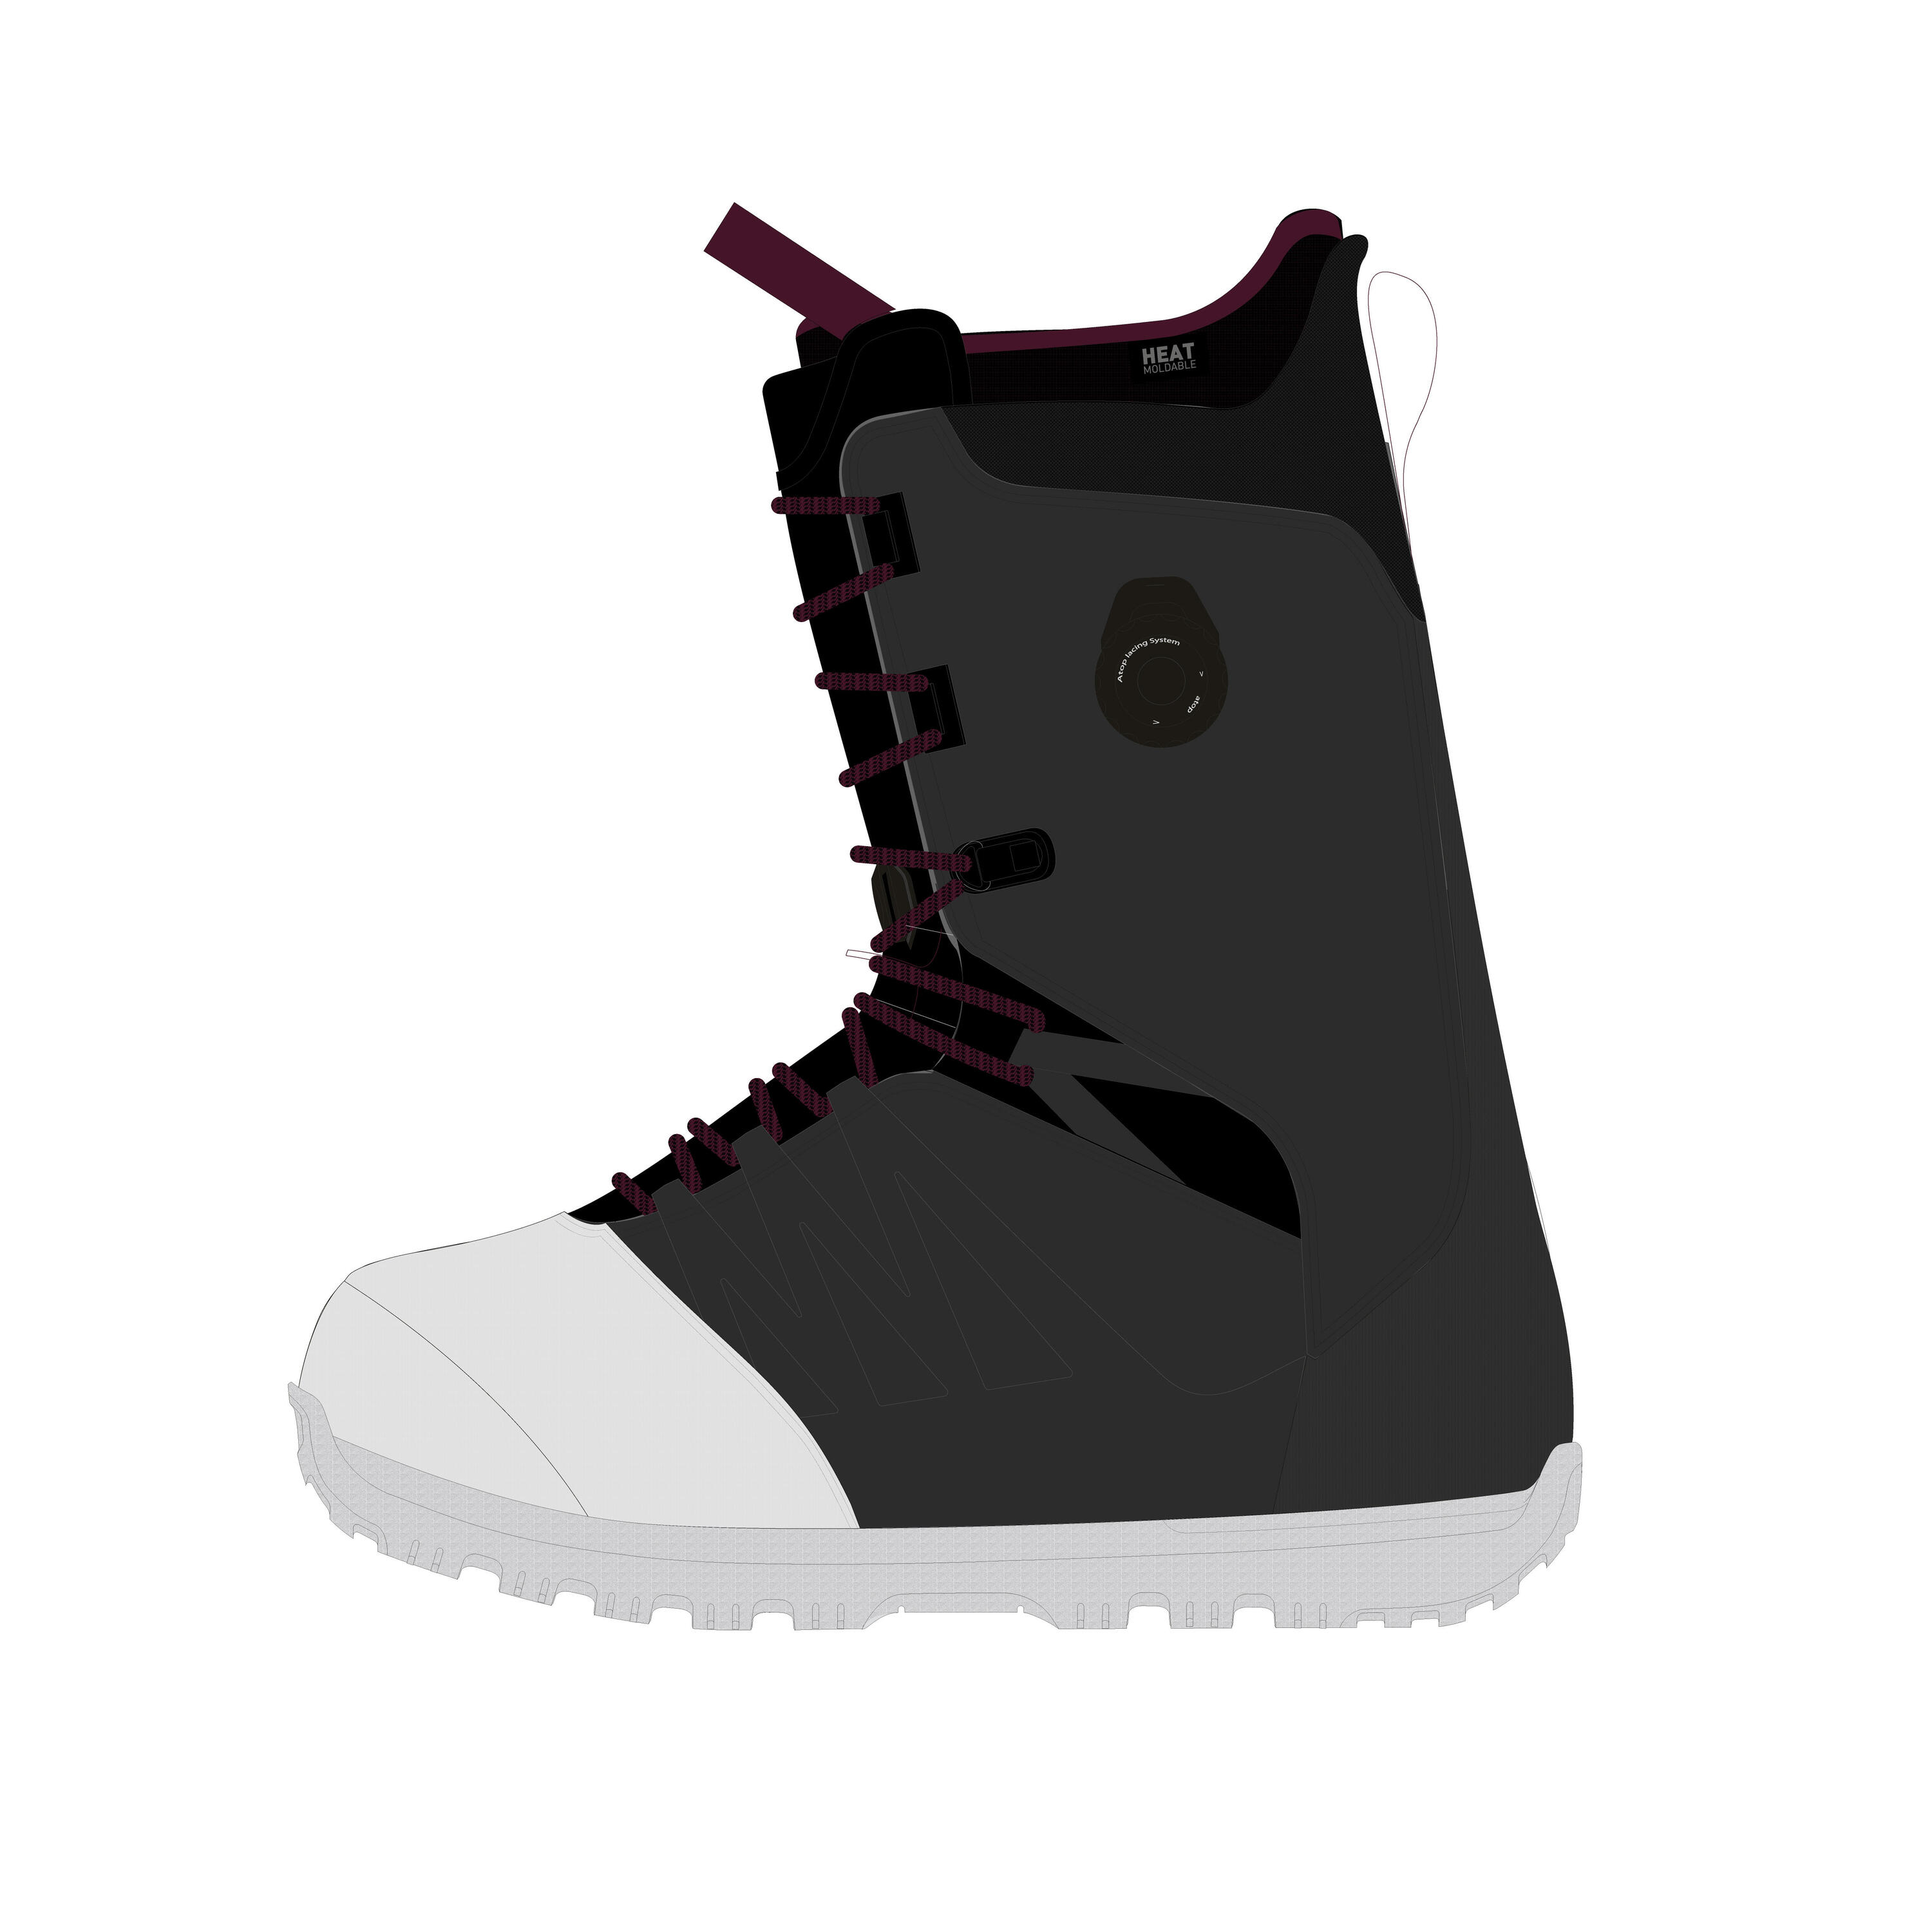 Men's Snowboard Boots FS/AM, Endzone Black 14/14